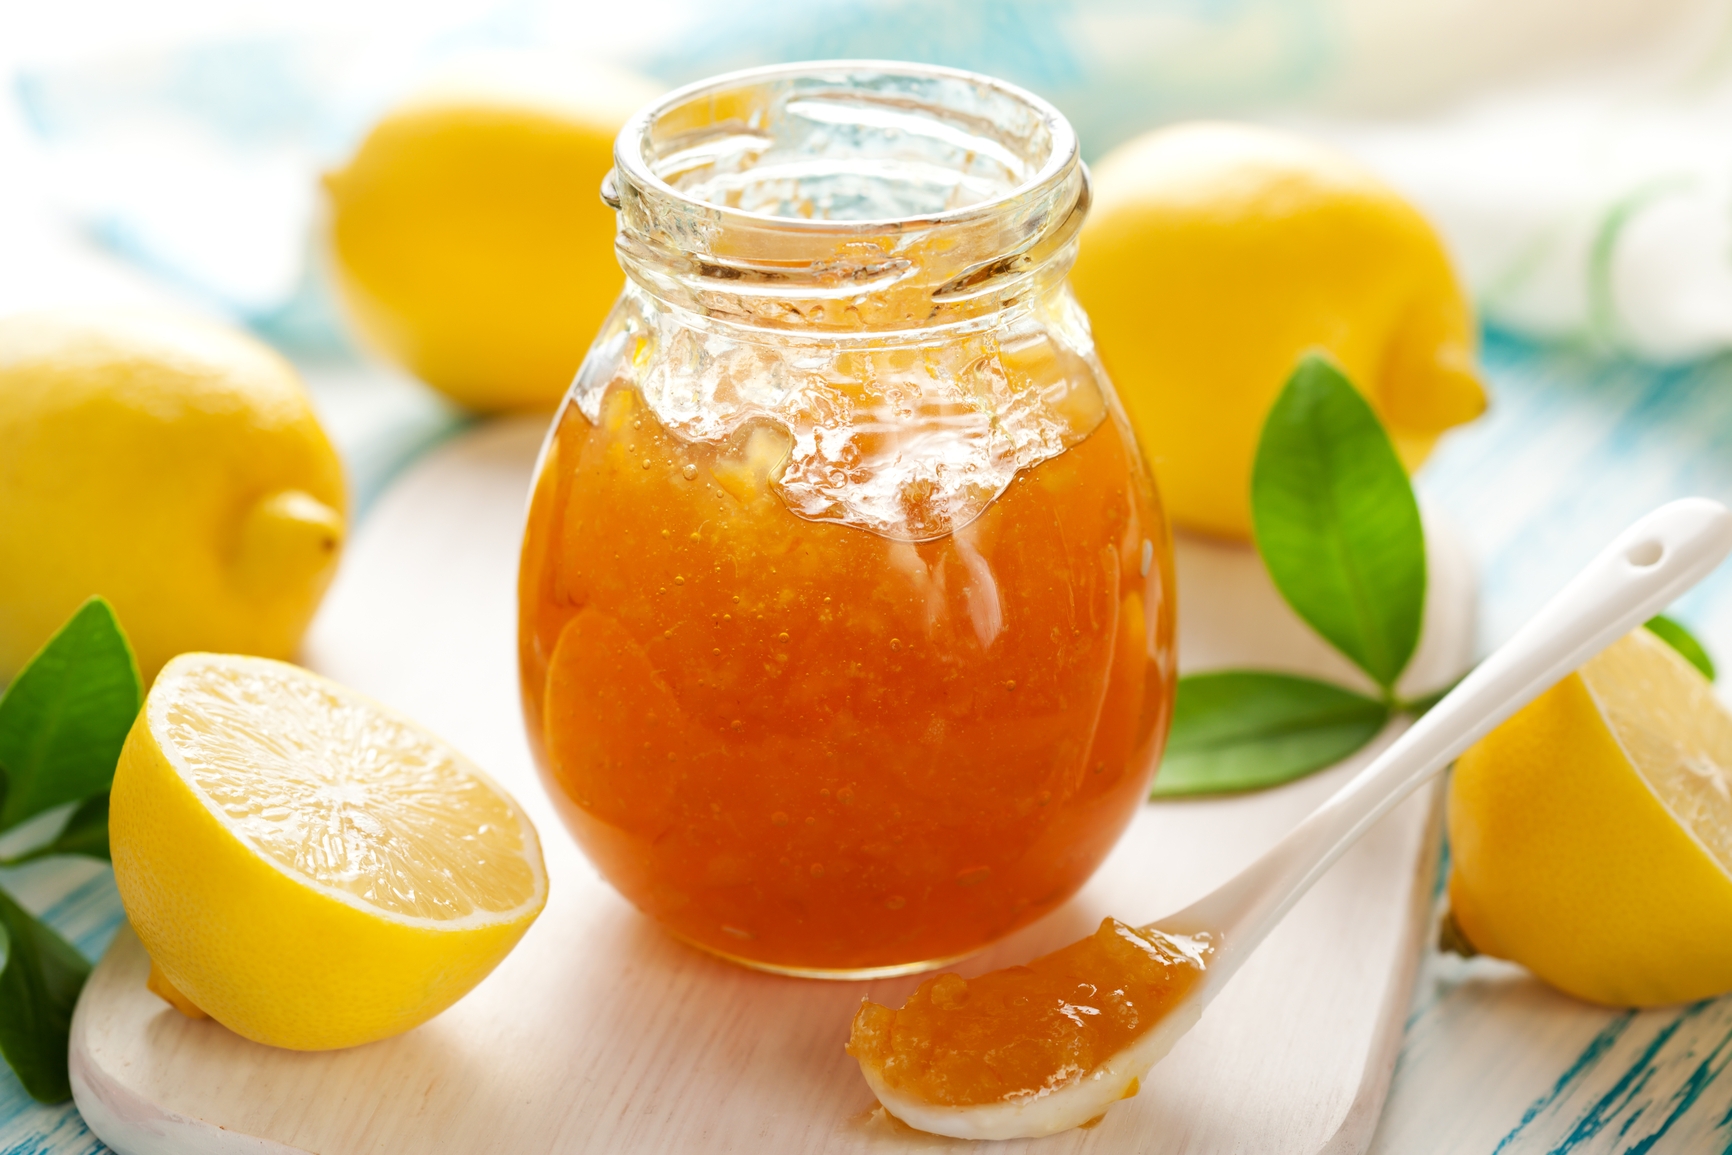 How to make lemon jam